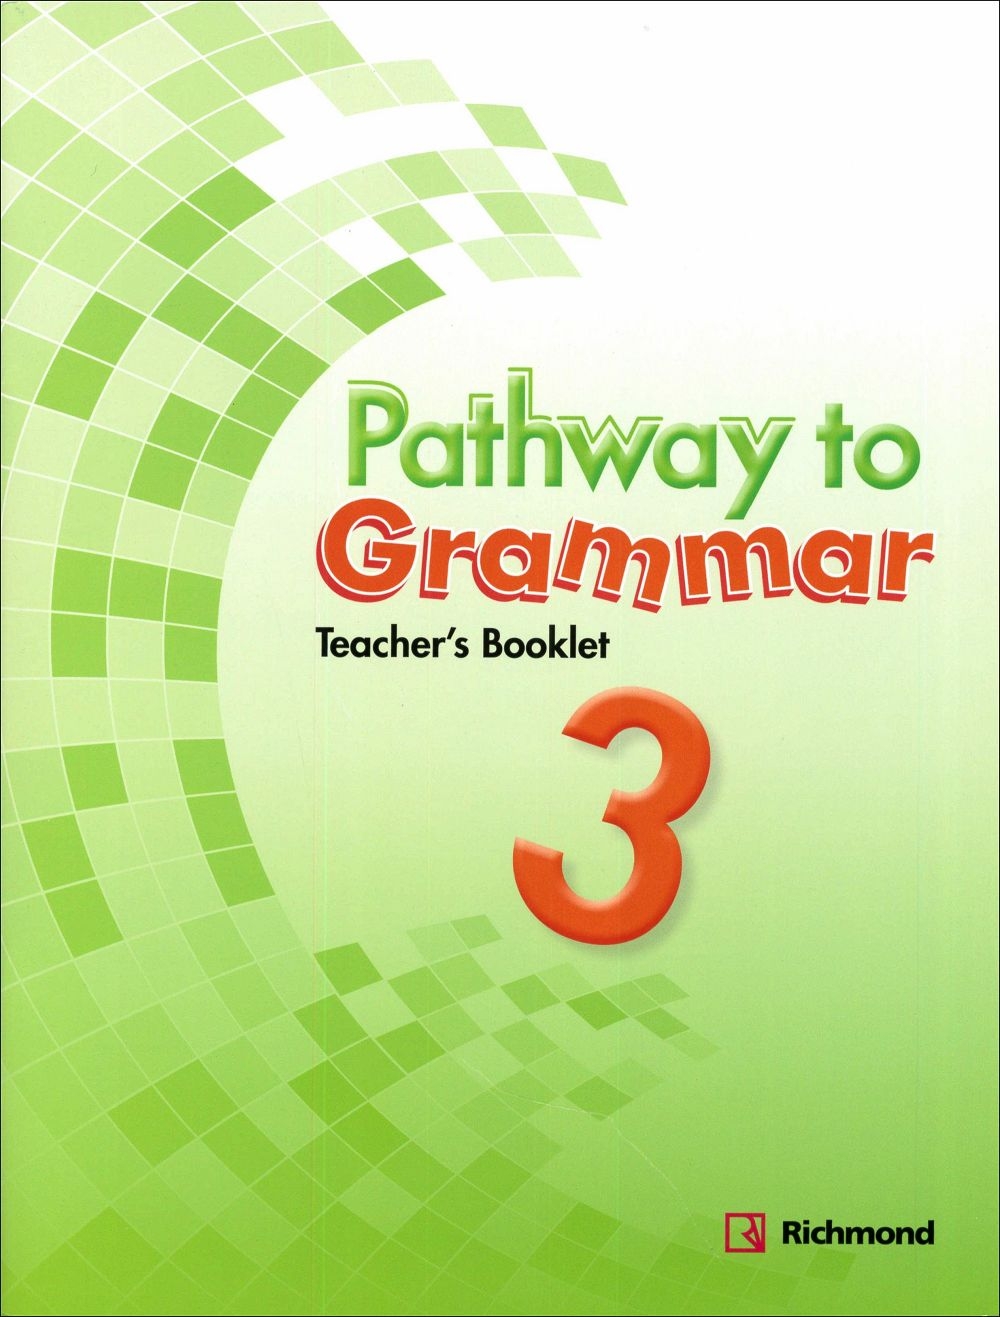 Pathway to Grammar (3) Teacher’s Booklet